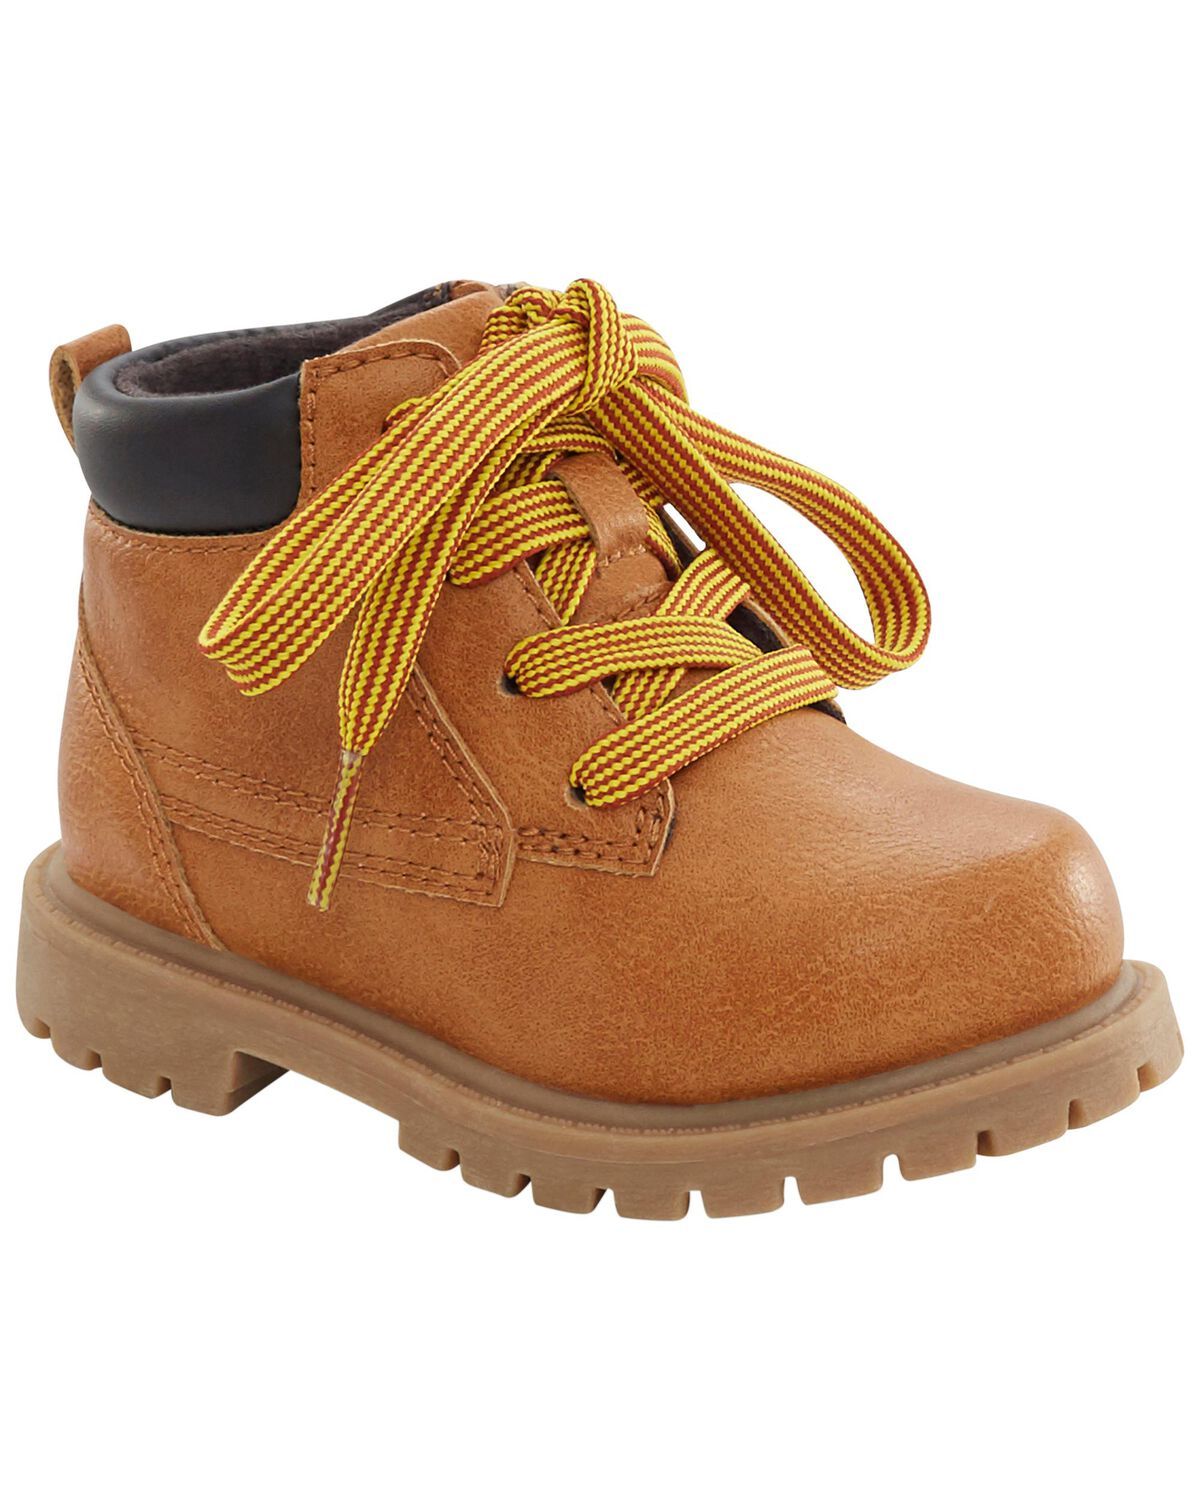 Brown Toddler Hiking Boots | carters.com | Carter's